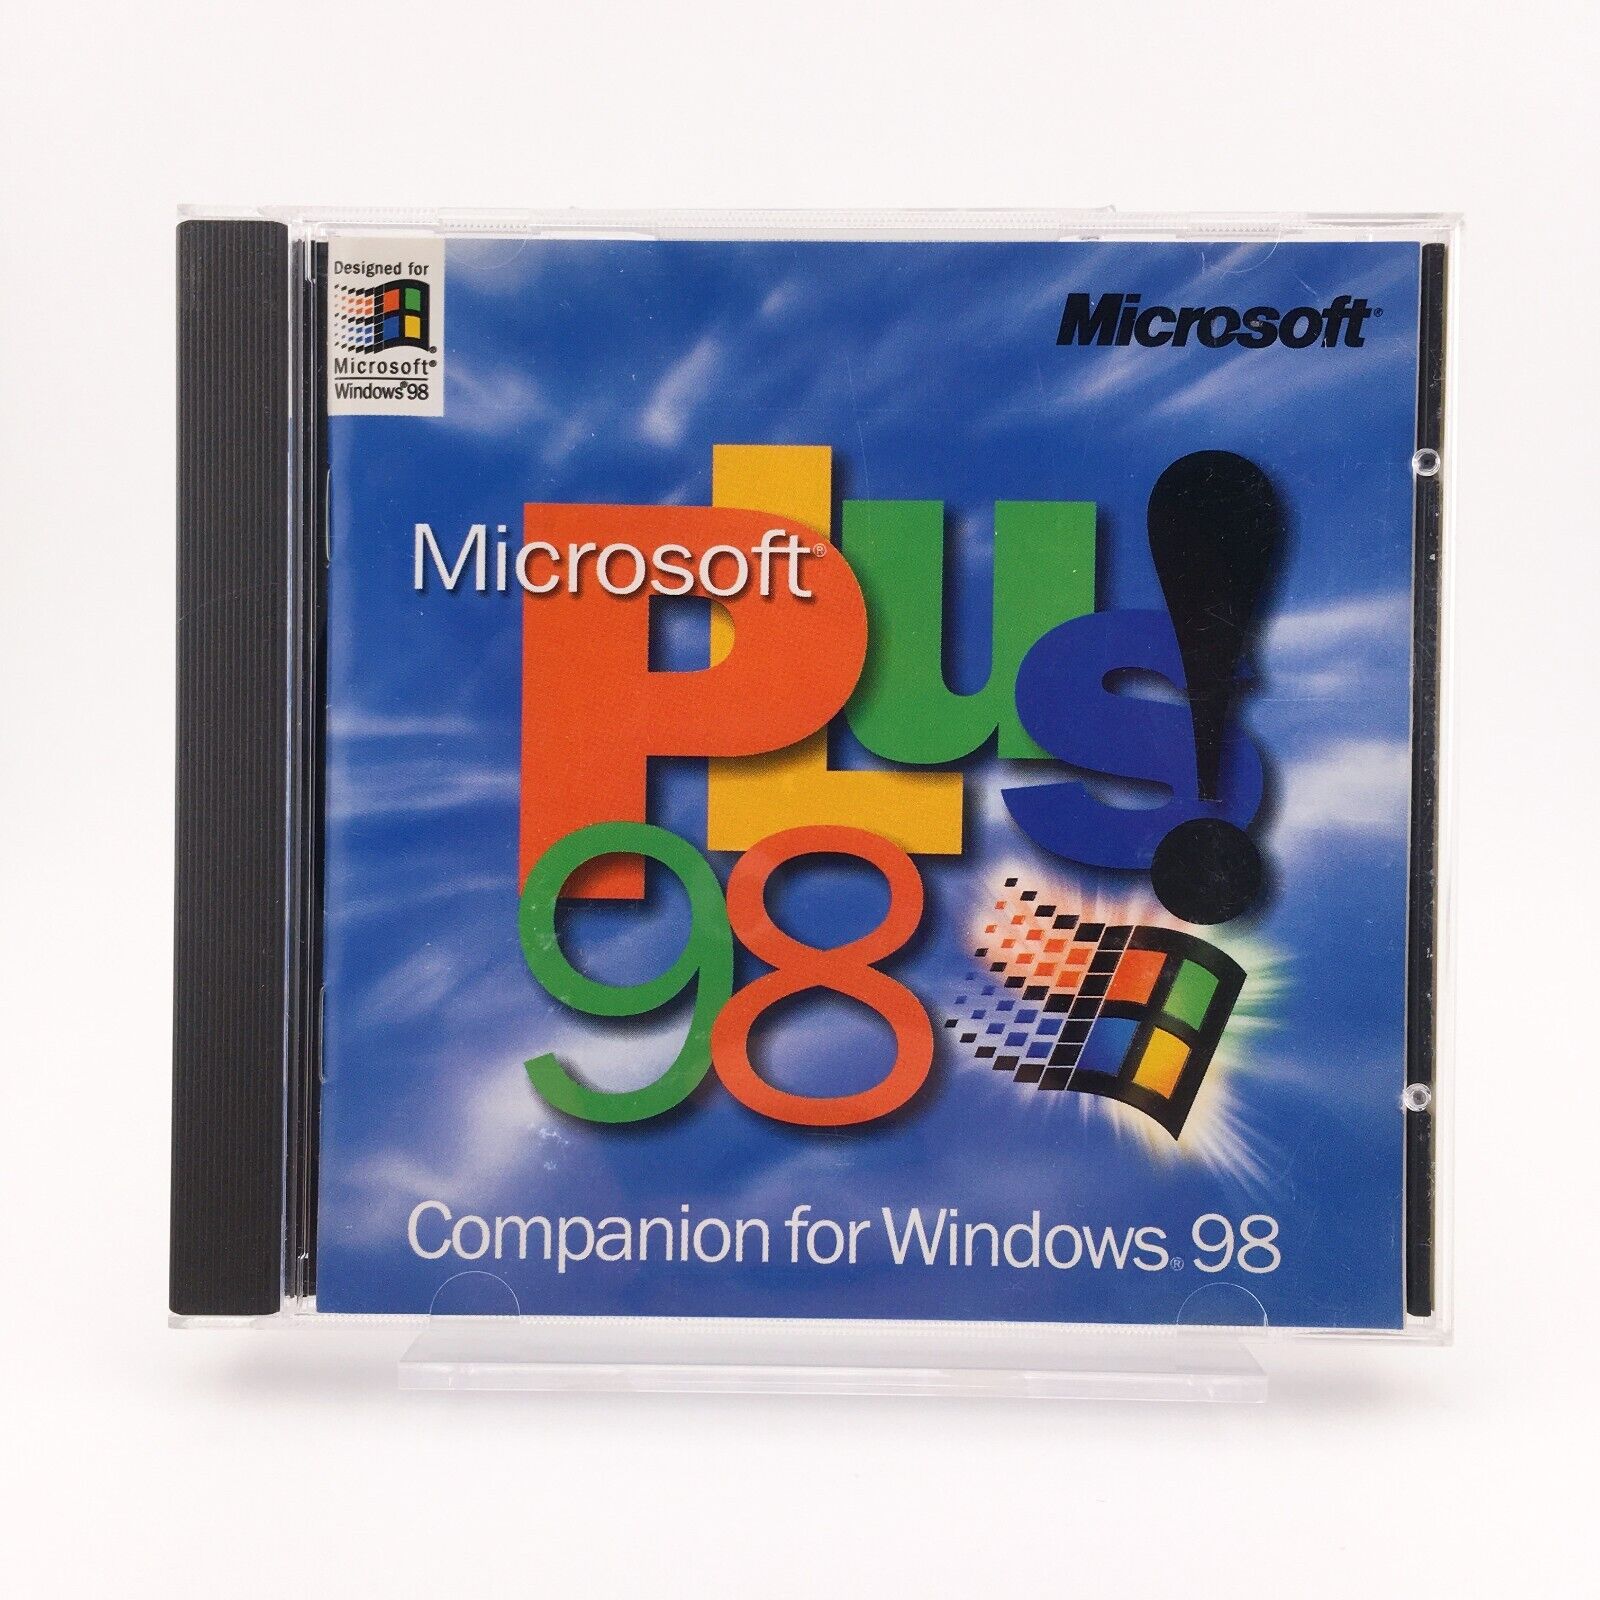 Microsoft Plus 98 Companion For Windows 98 CD Disc + Product Key